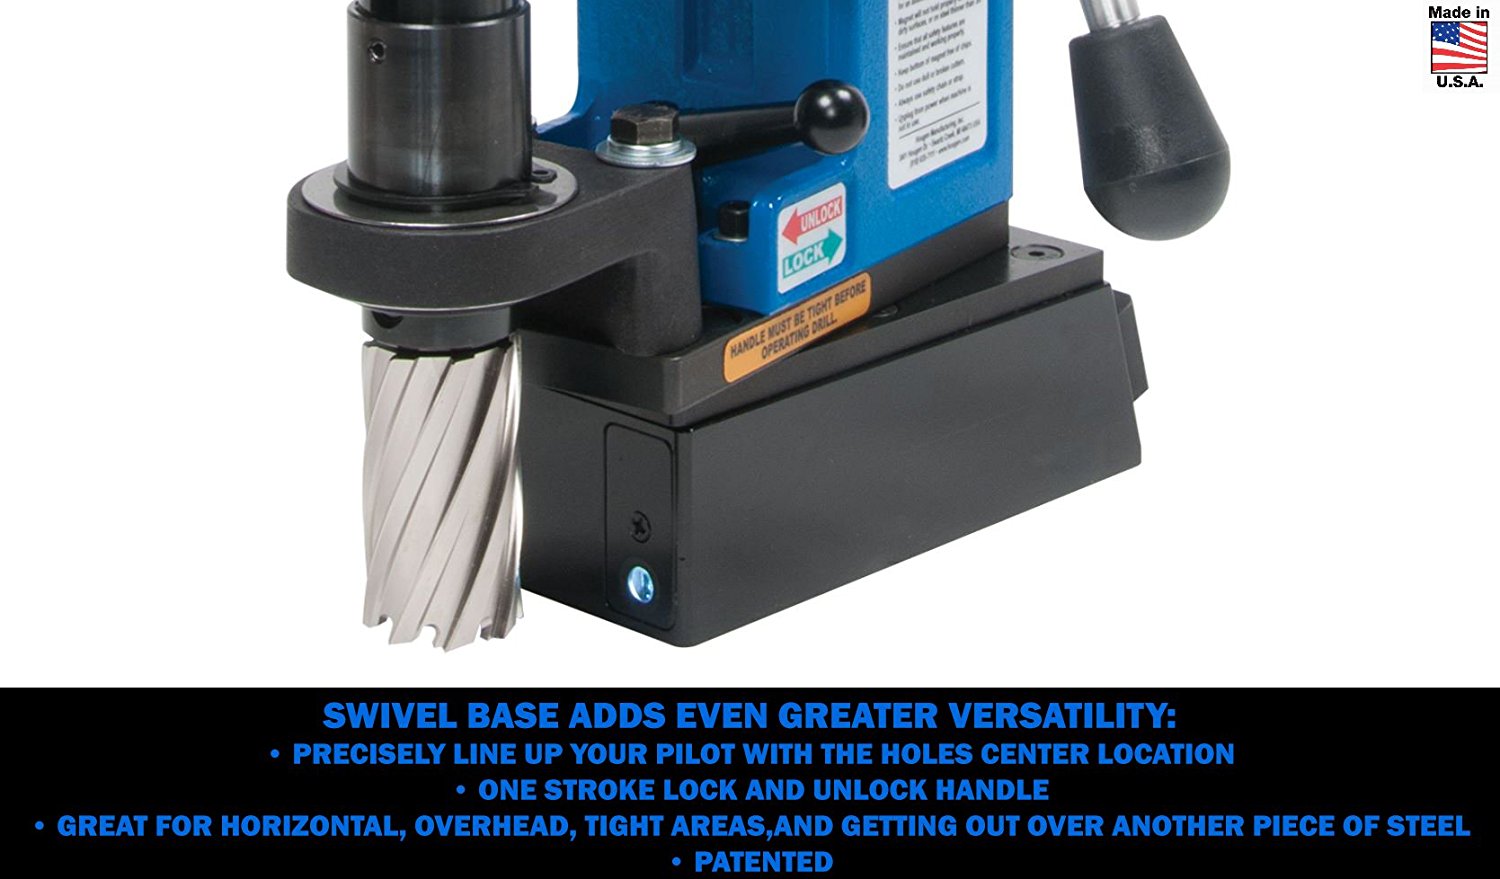 Hougen HMD904S 115-Volt drill press